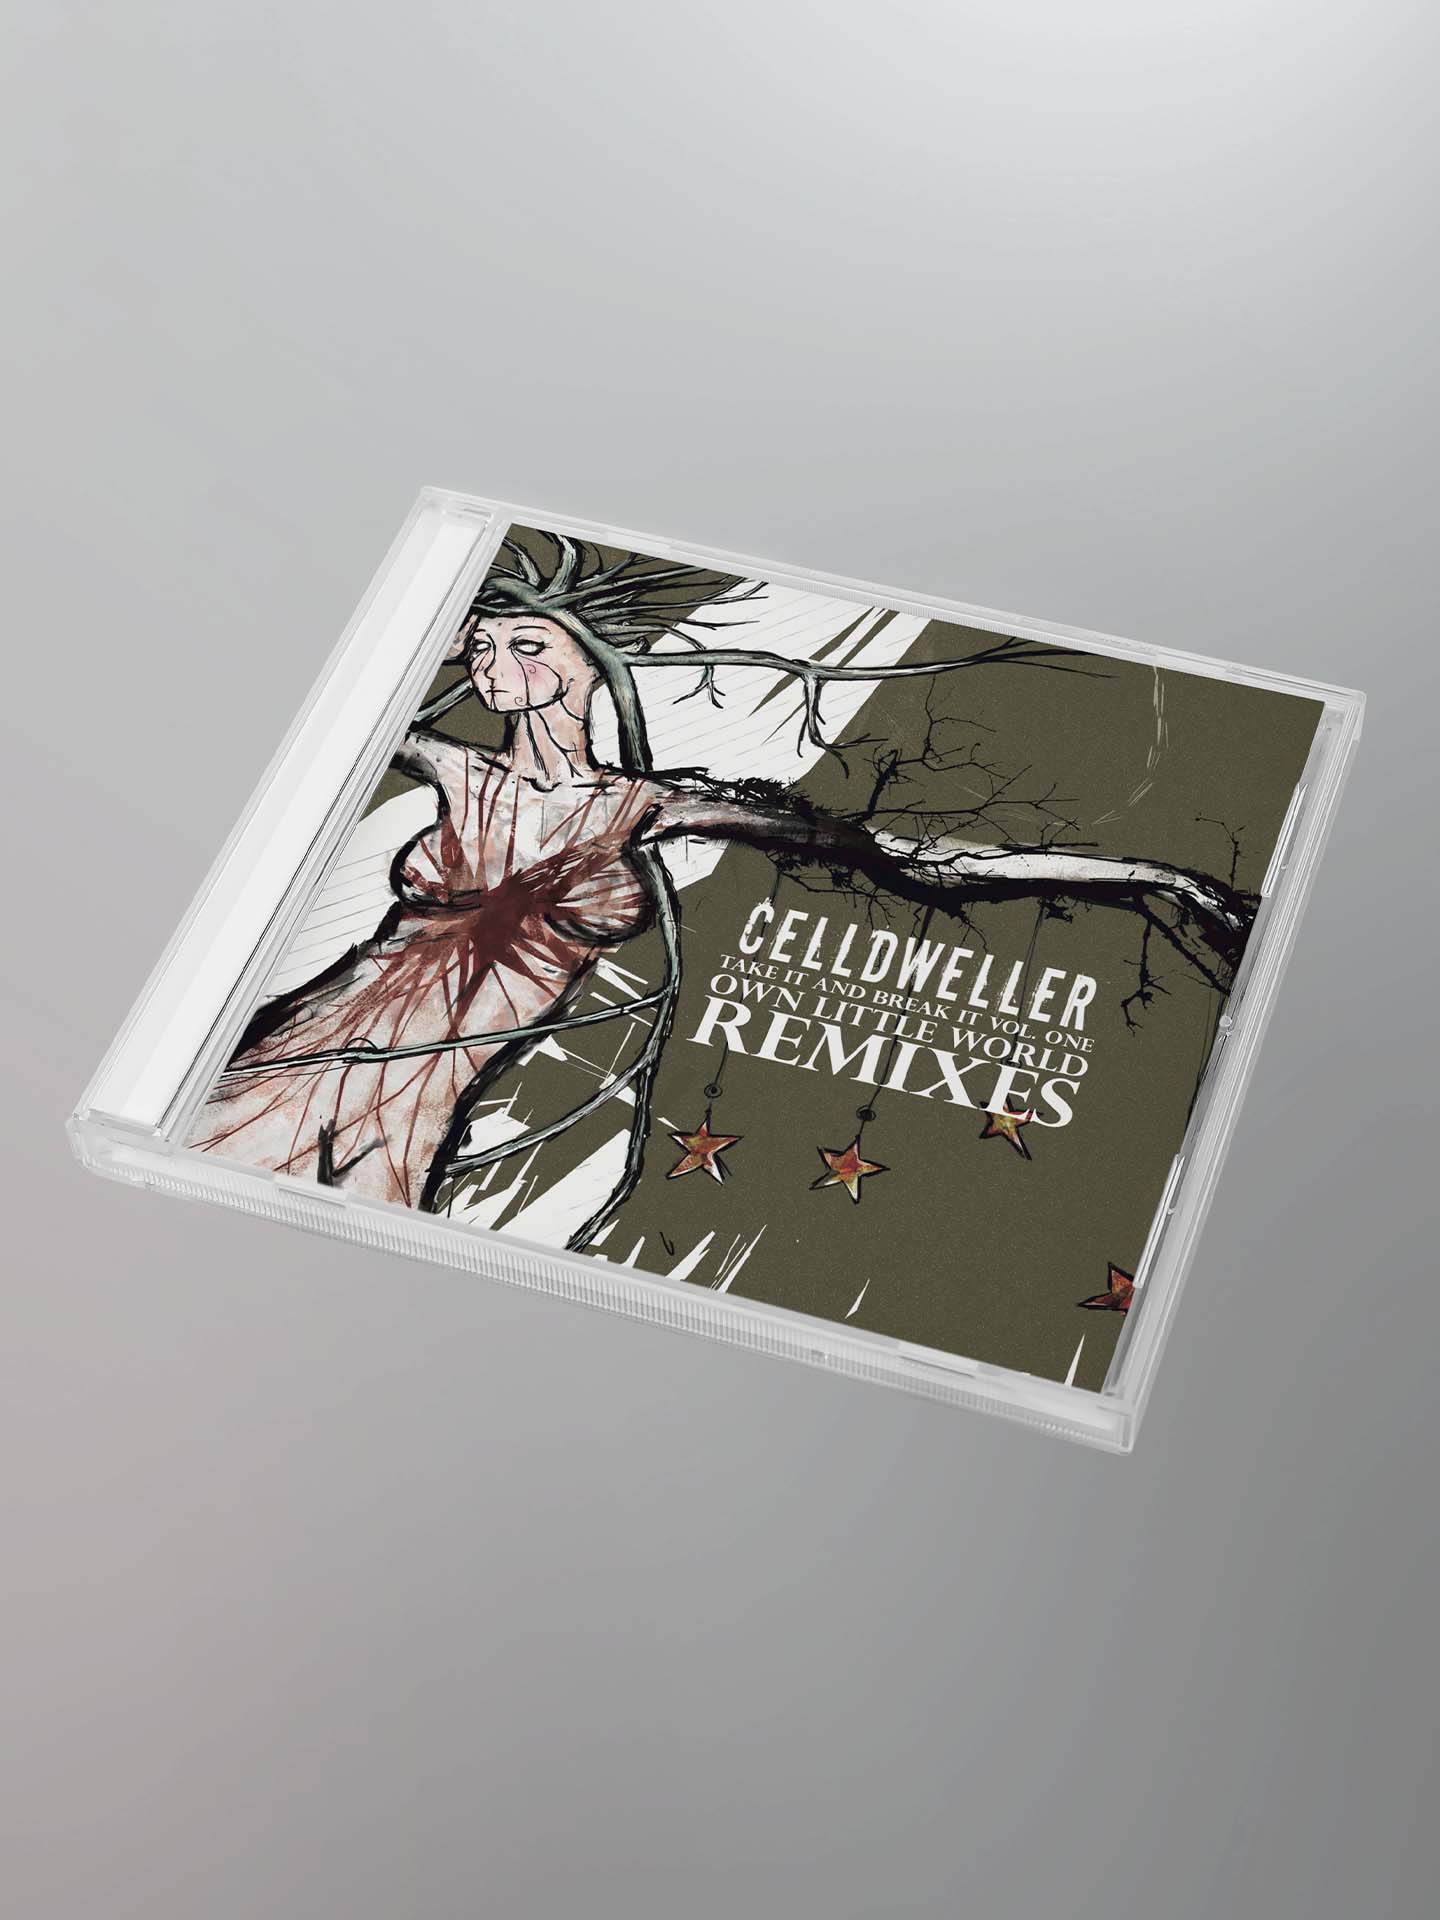 Celldweller - Take It & Break It Vol 1: Own Little World Remixes 2CD